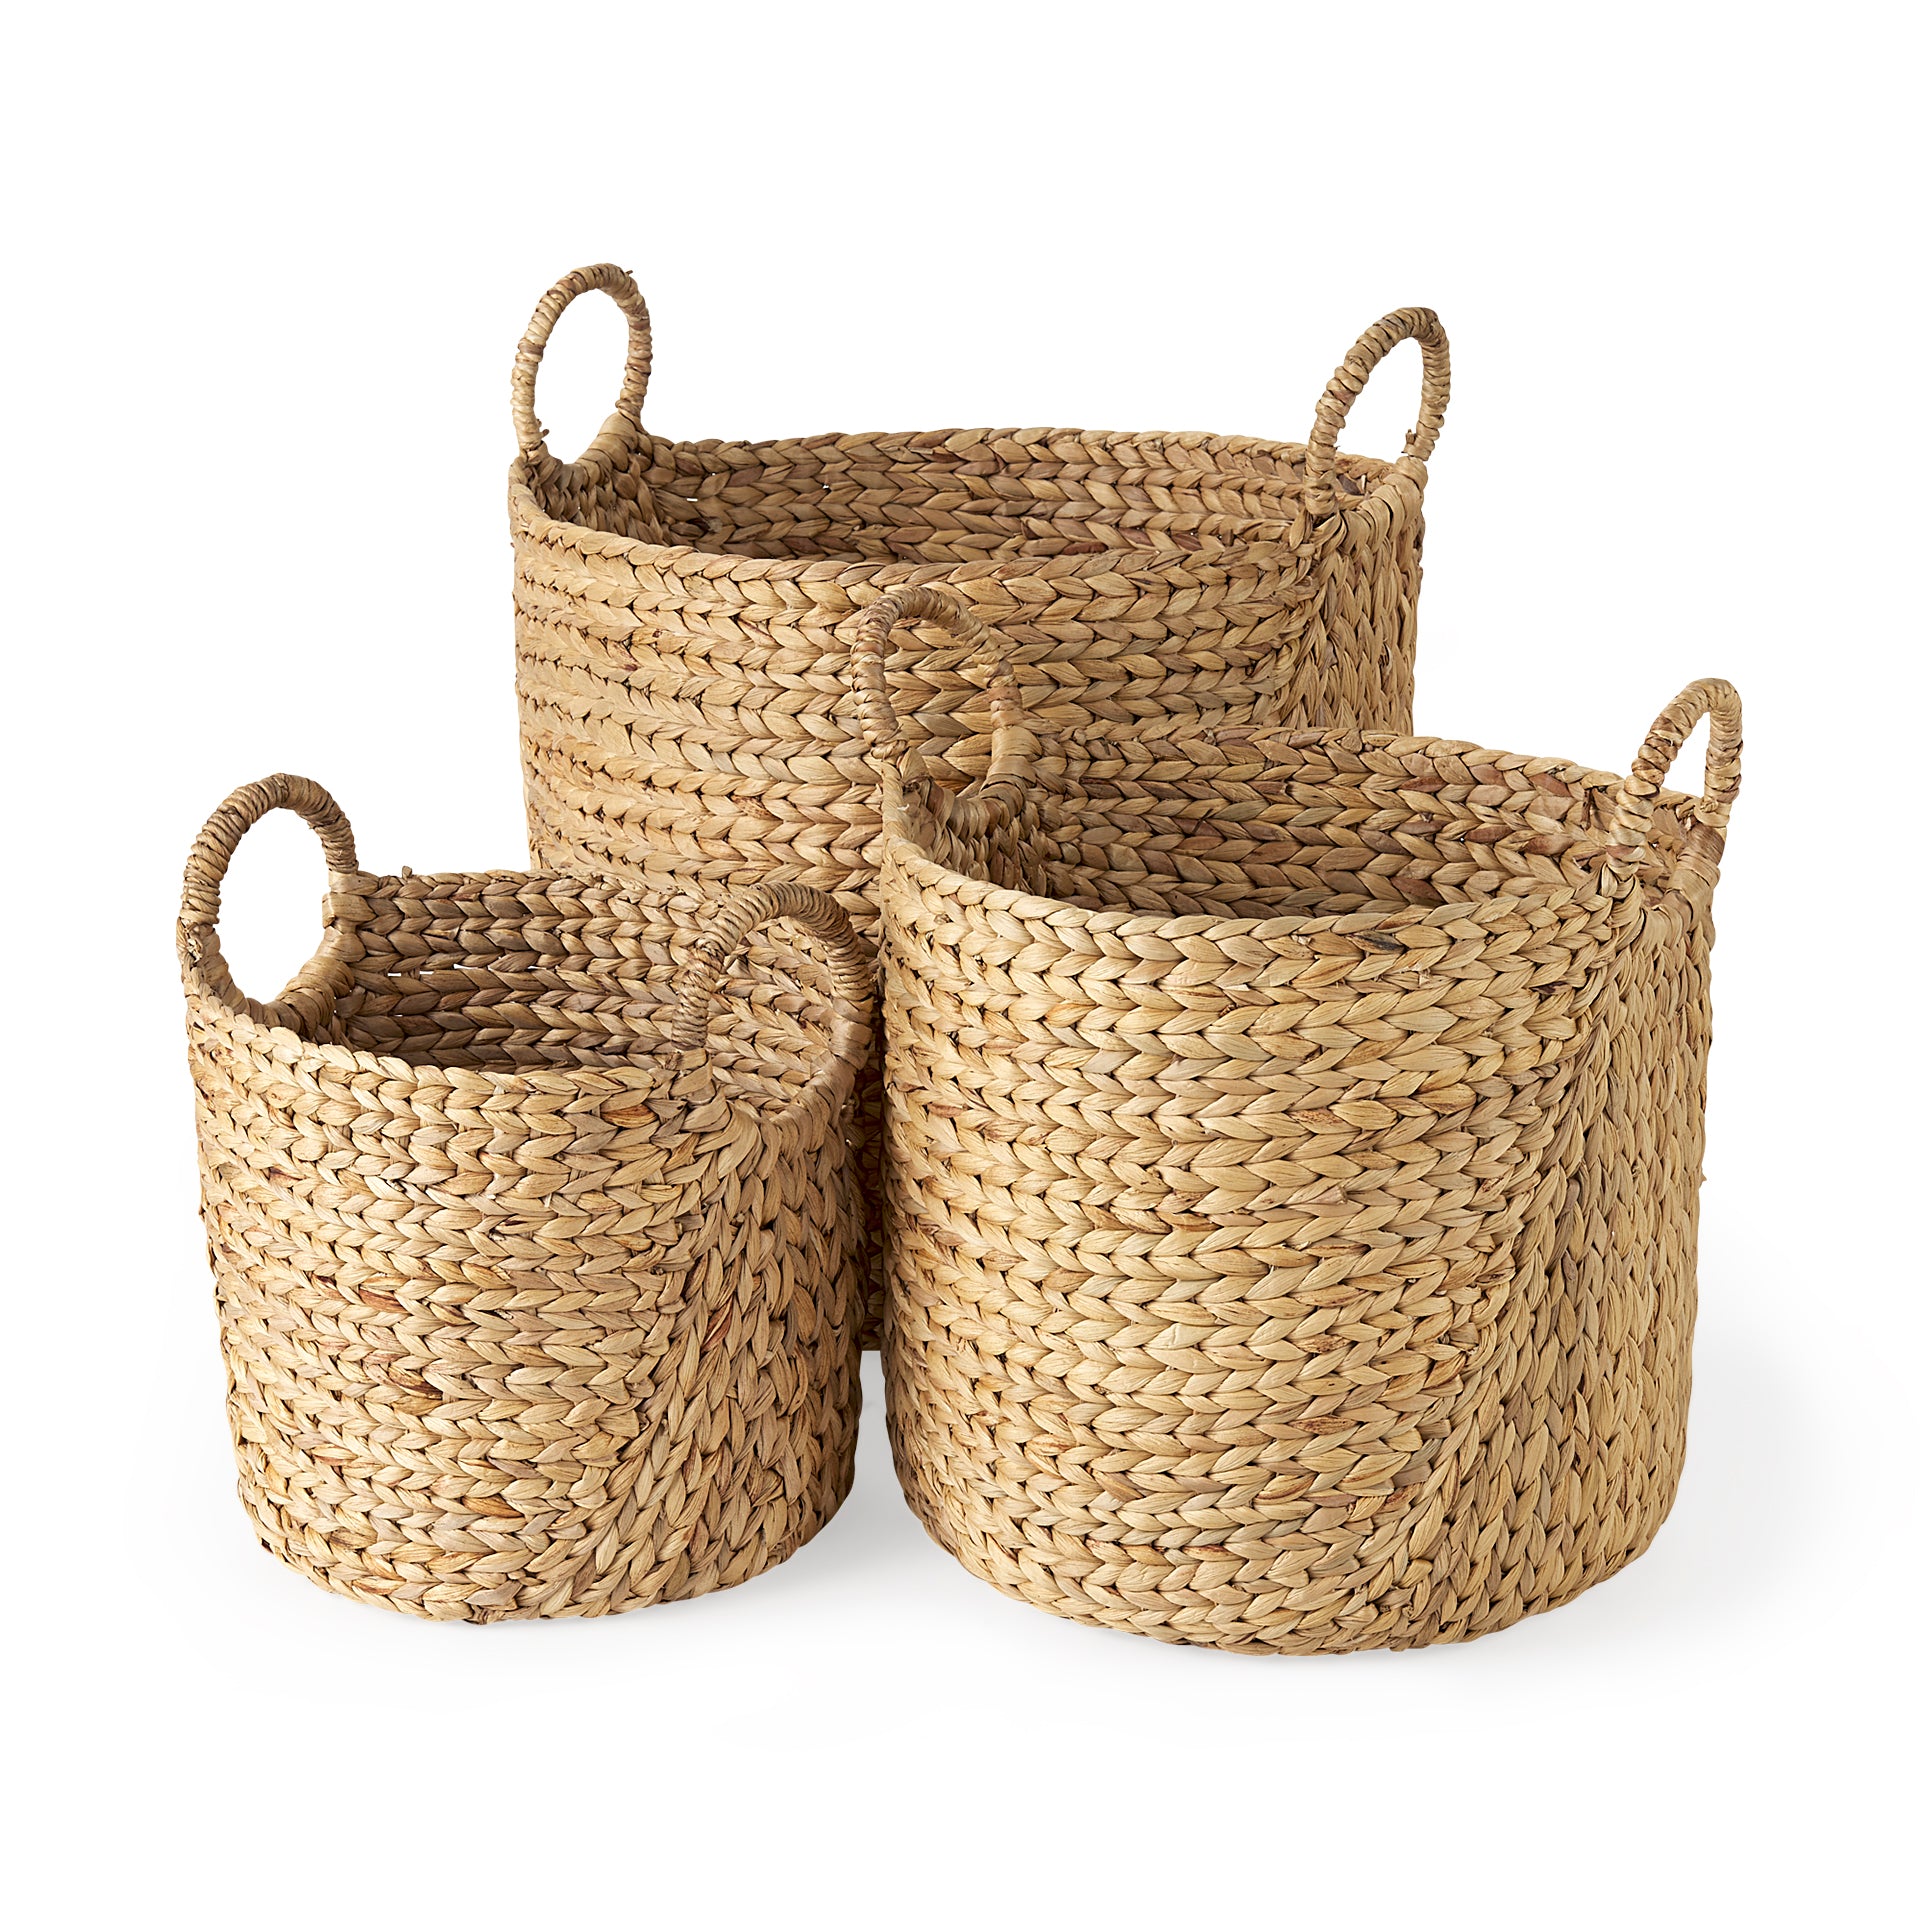 Cord baskets